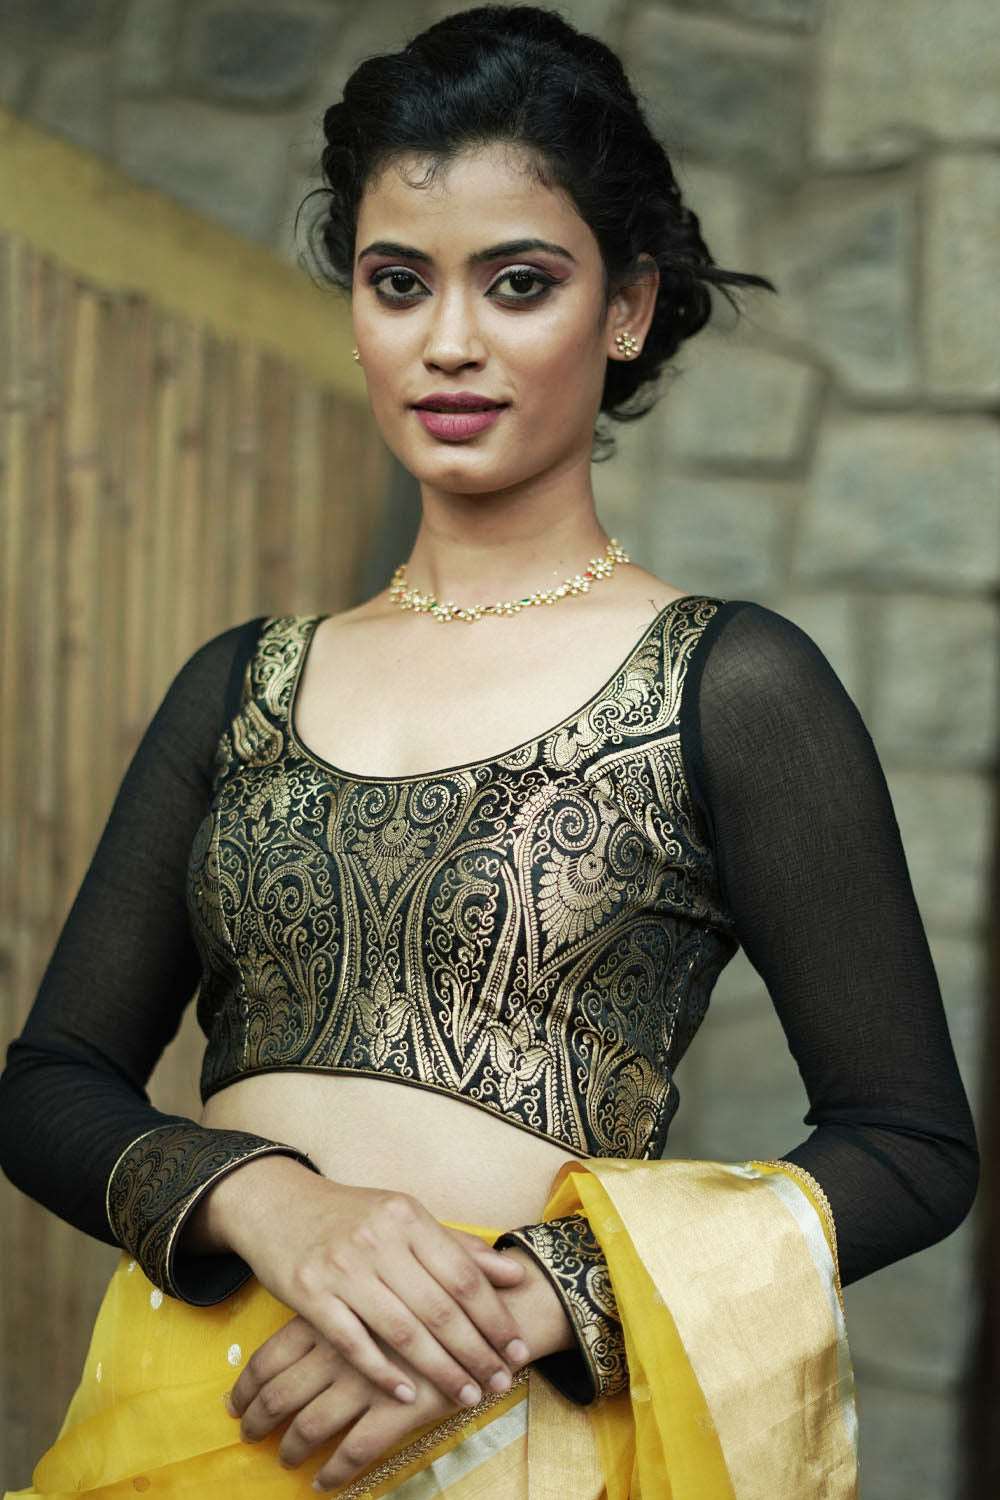 Black pure banarasi brocade U neck blouse with chiffon sleeves and cuff detailing